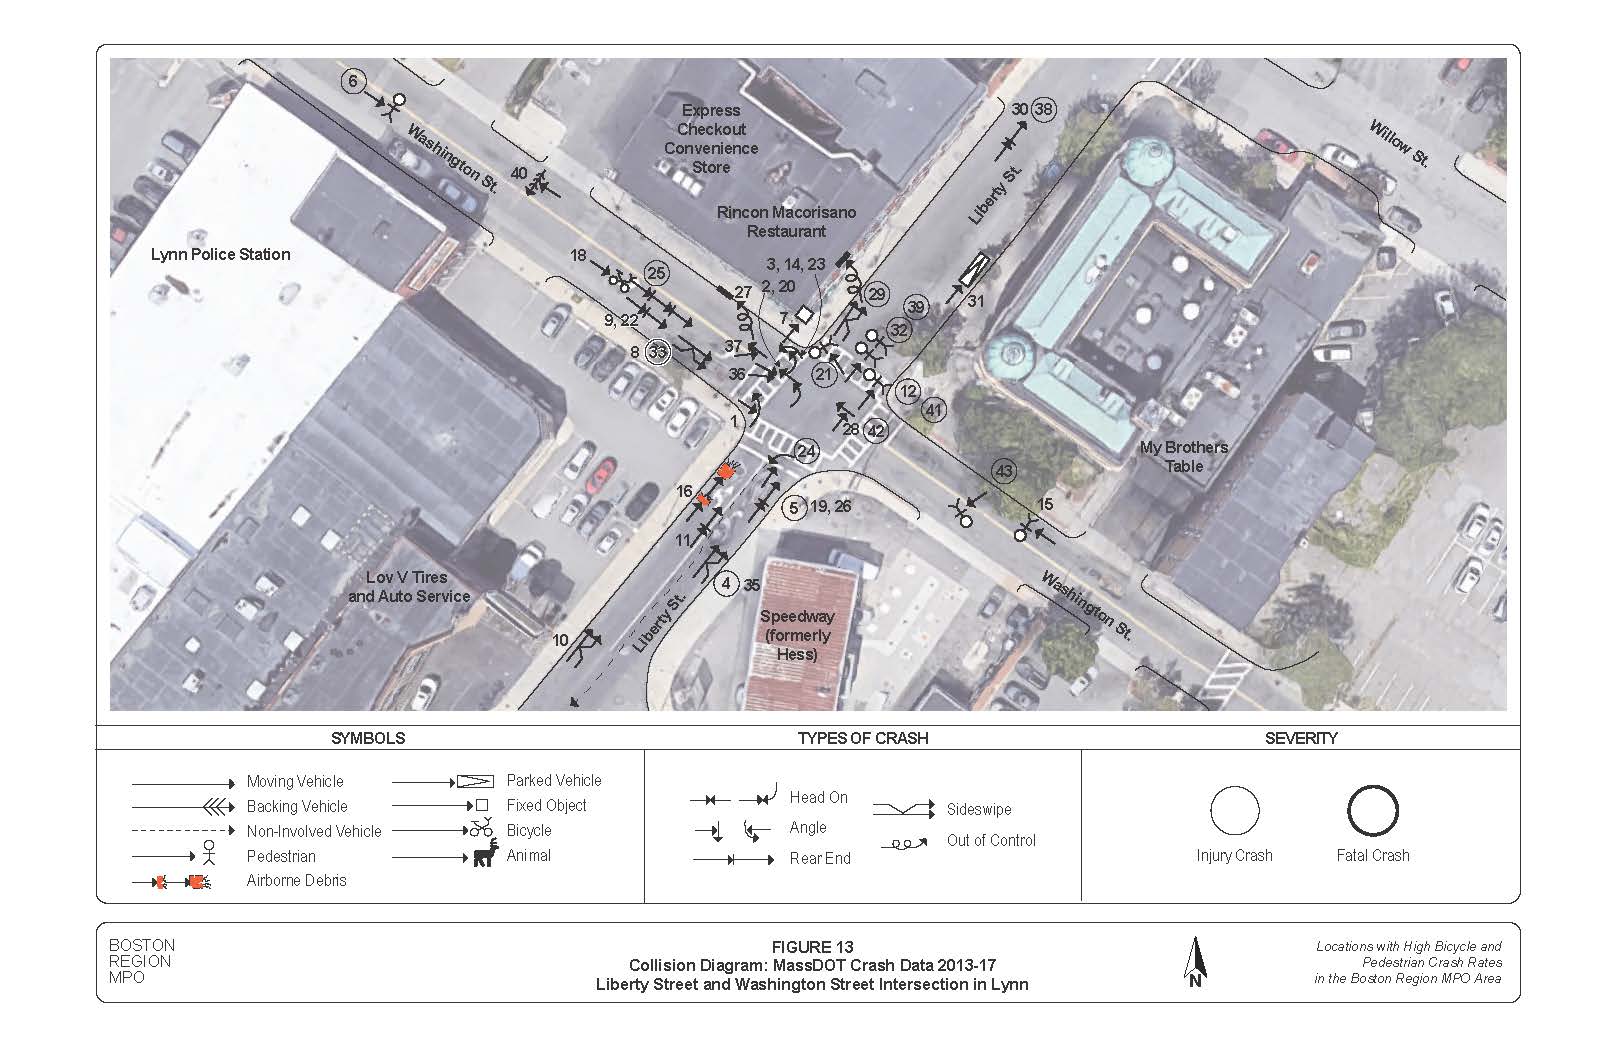 Figure 13
Collision Diagram: MassDOT Crash Data 2013-17
Liberty Street and Washington Street Intersection in Lynn